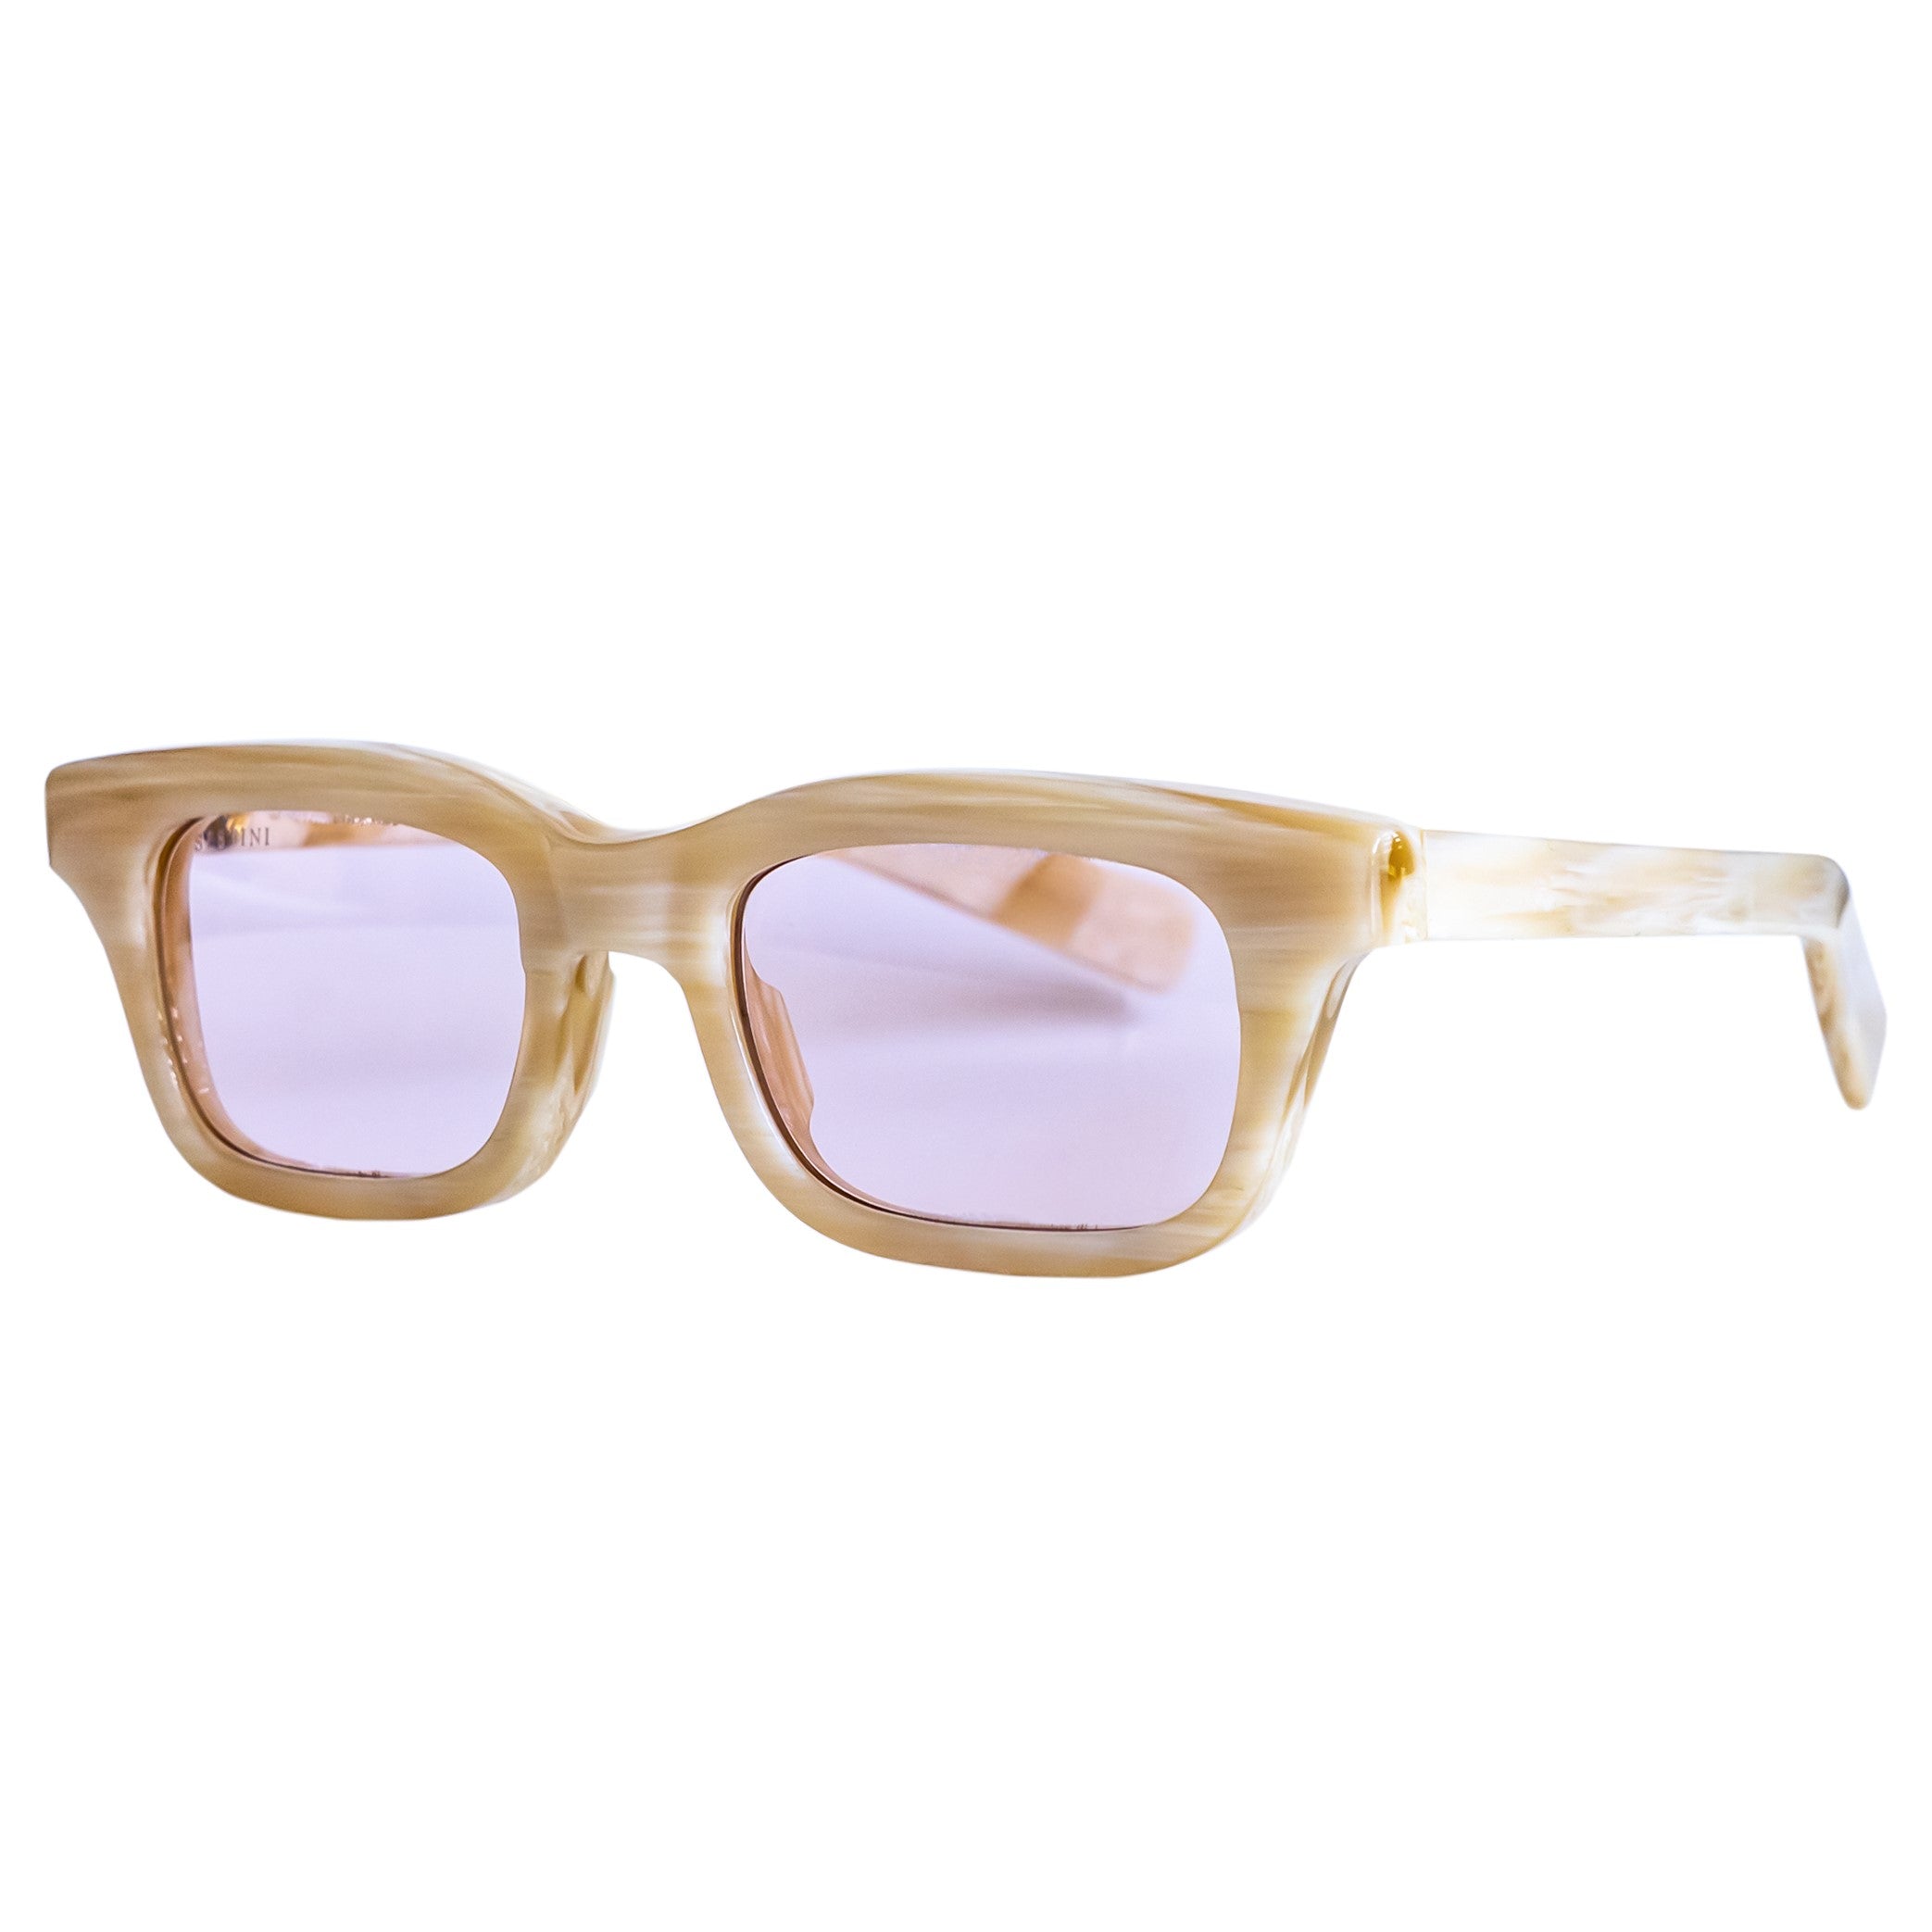 Sestini for Eden Rock St Barths Quattro Sunglasses - Oetker Collection Hotels Boutique